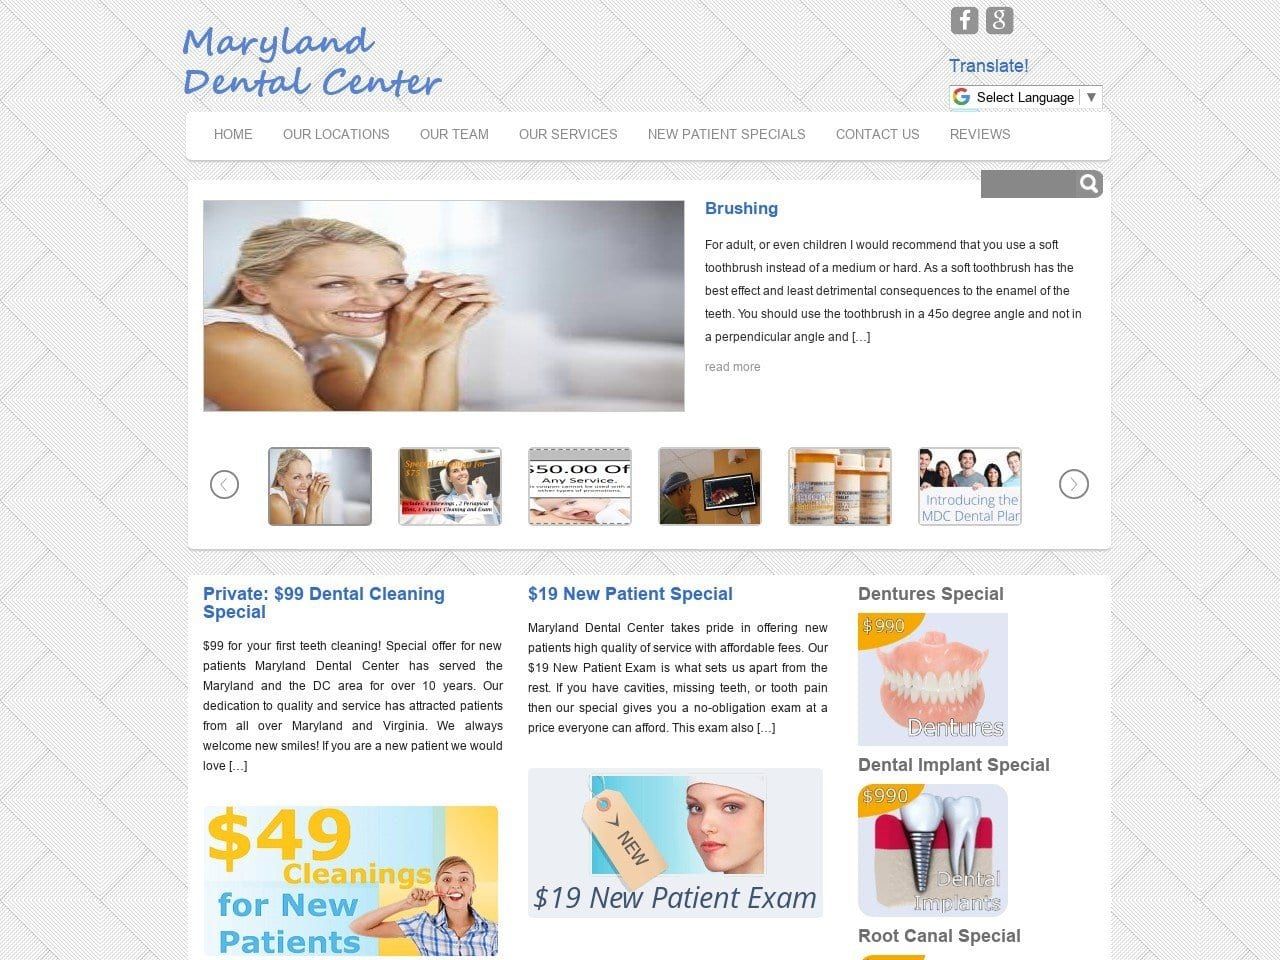 Maryland Dental Center Website Screenshot from marylanddentalcenter.com